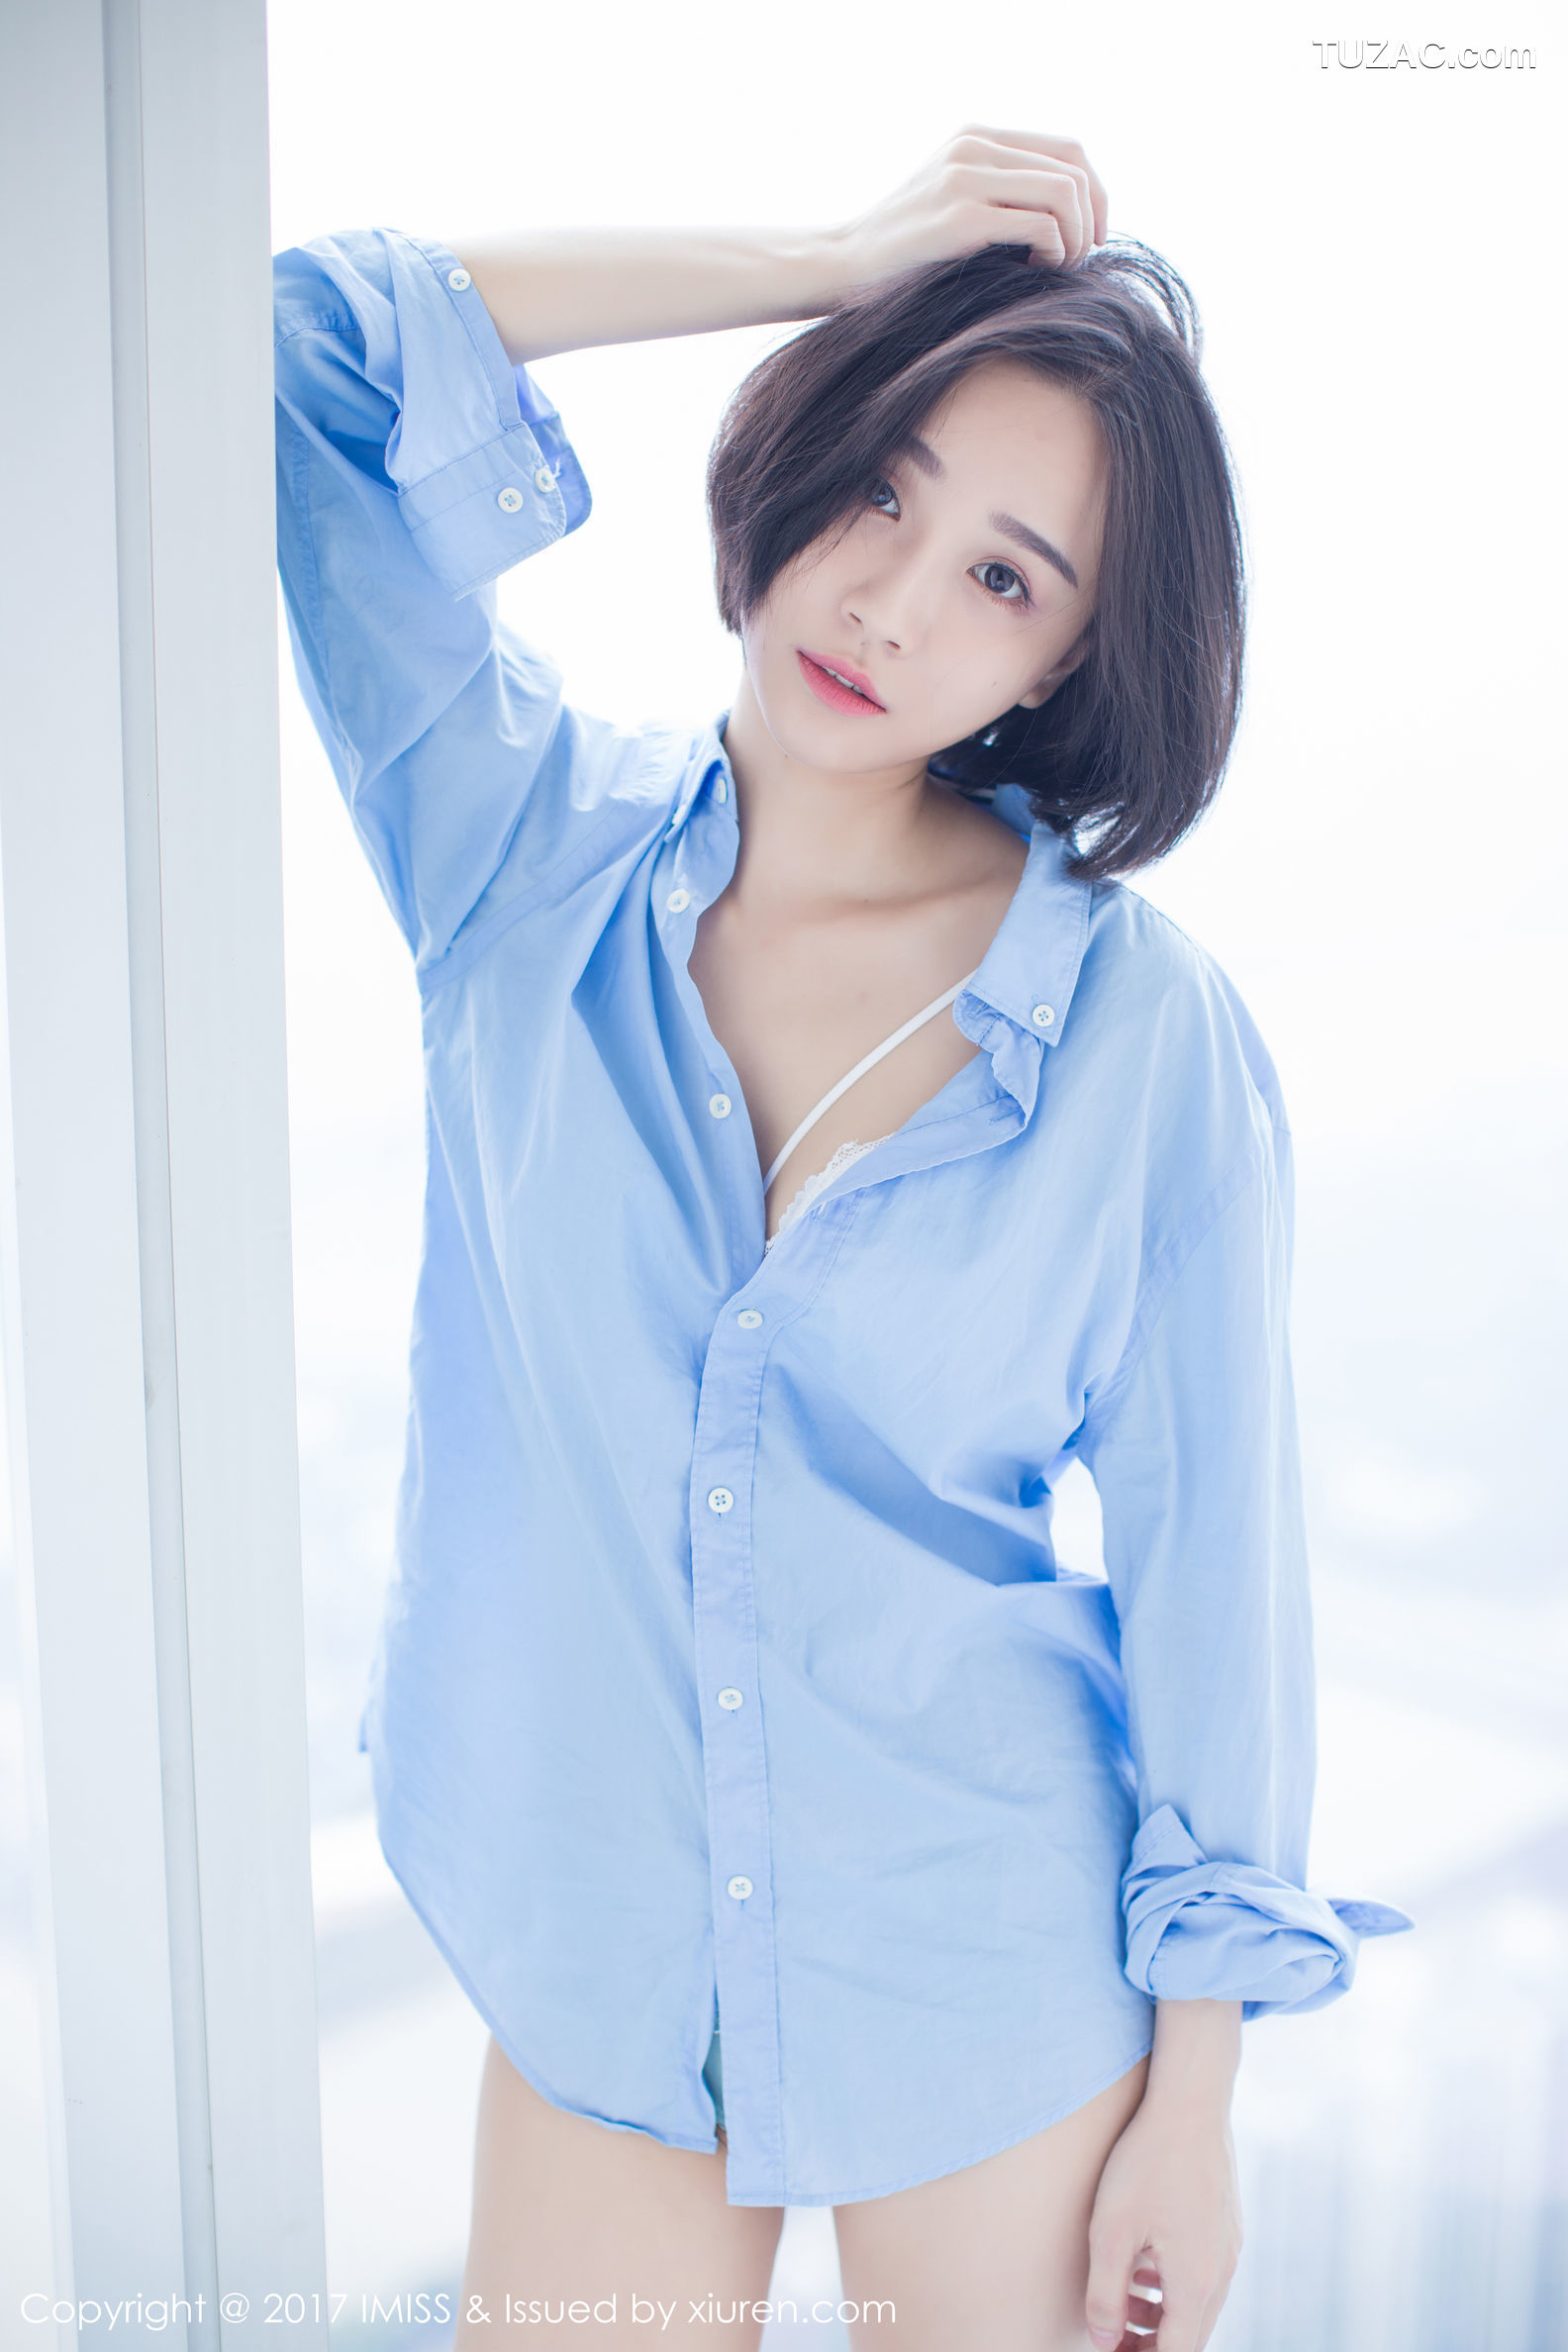 IMiss爱蜜社-178-Livia-清爽蓝色衬衣-白色蕾丝